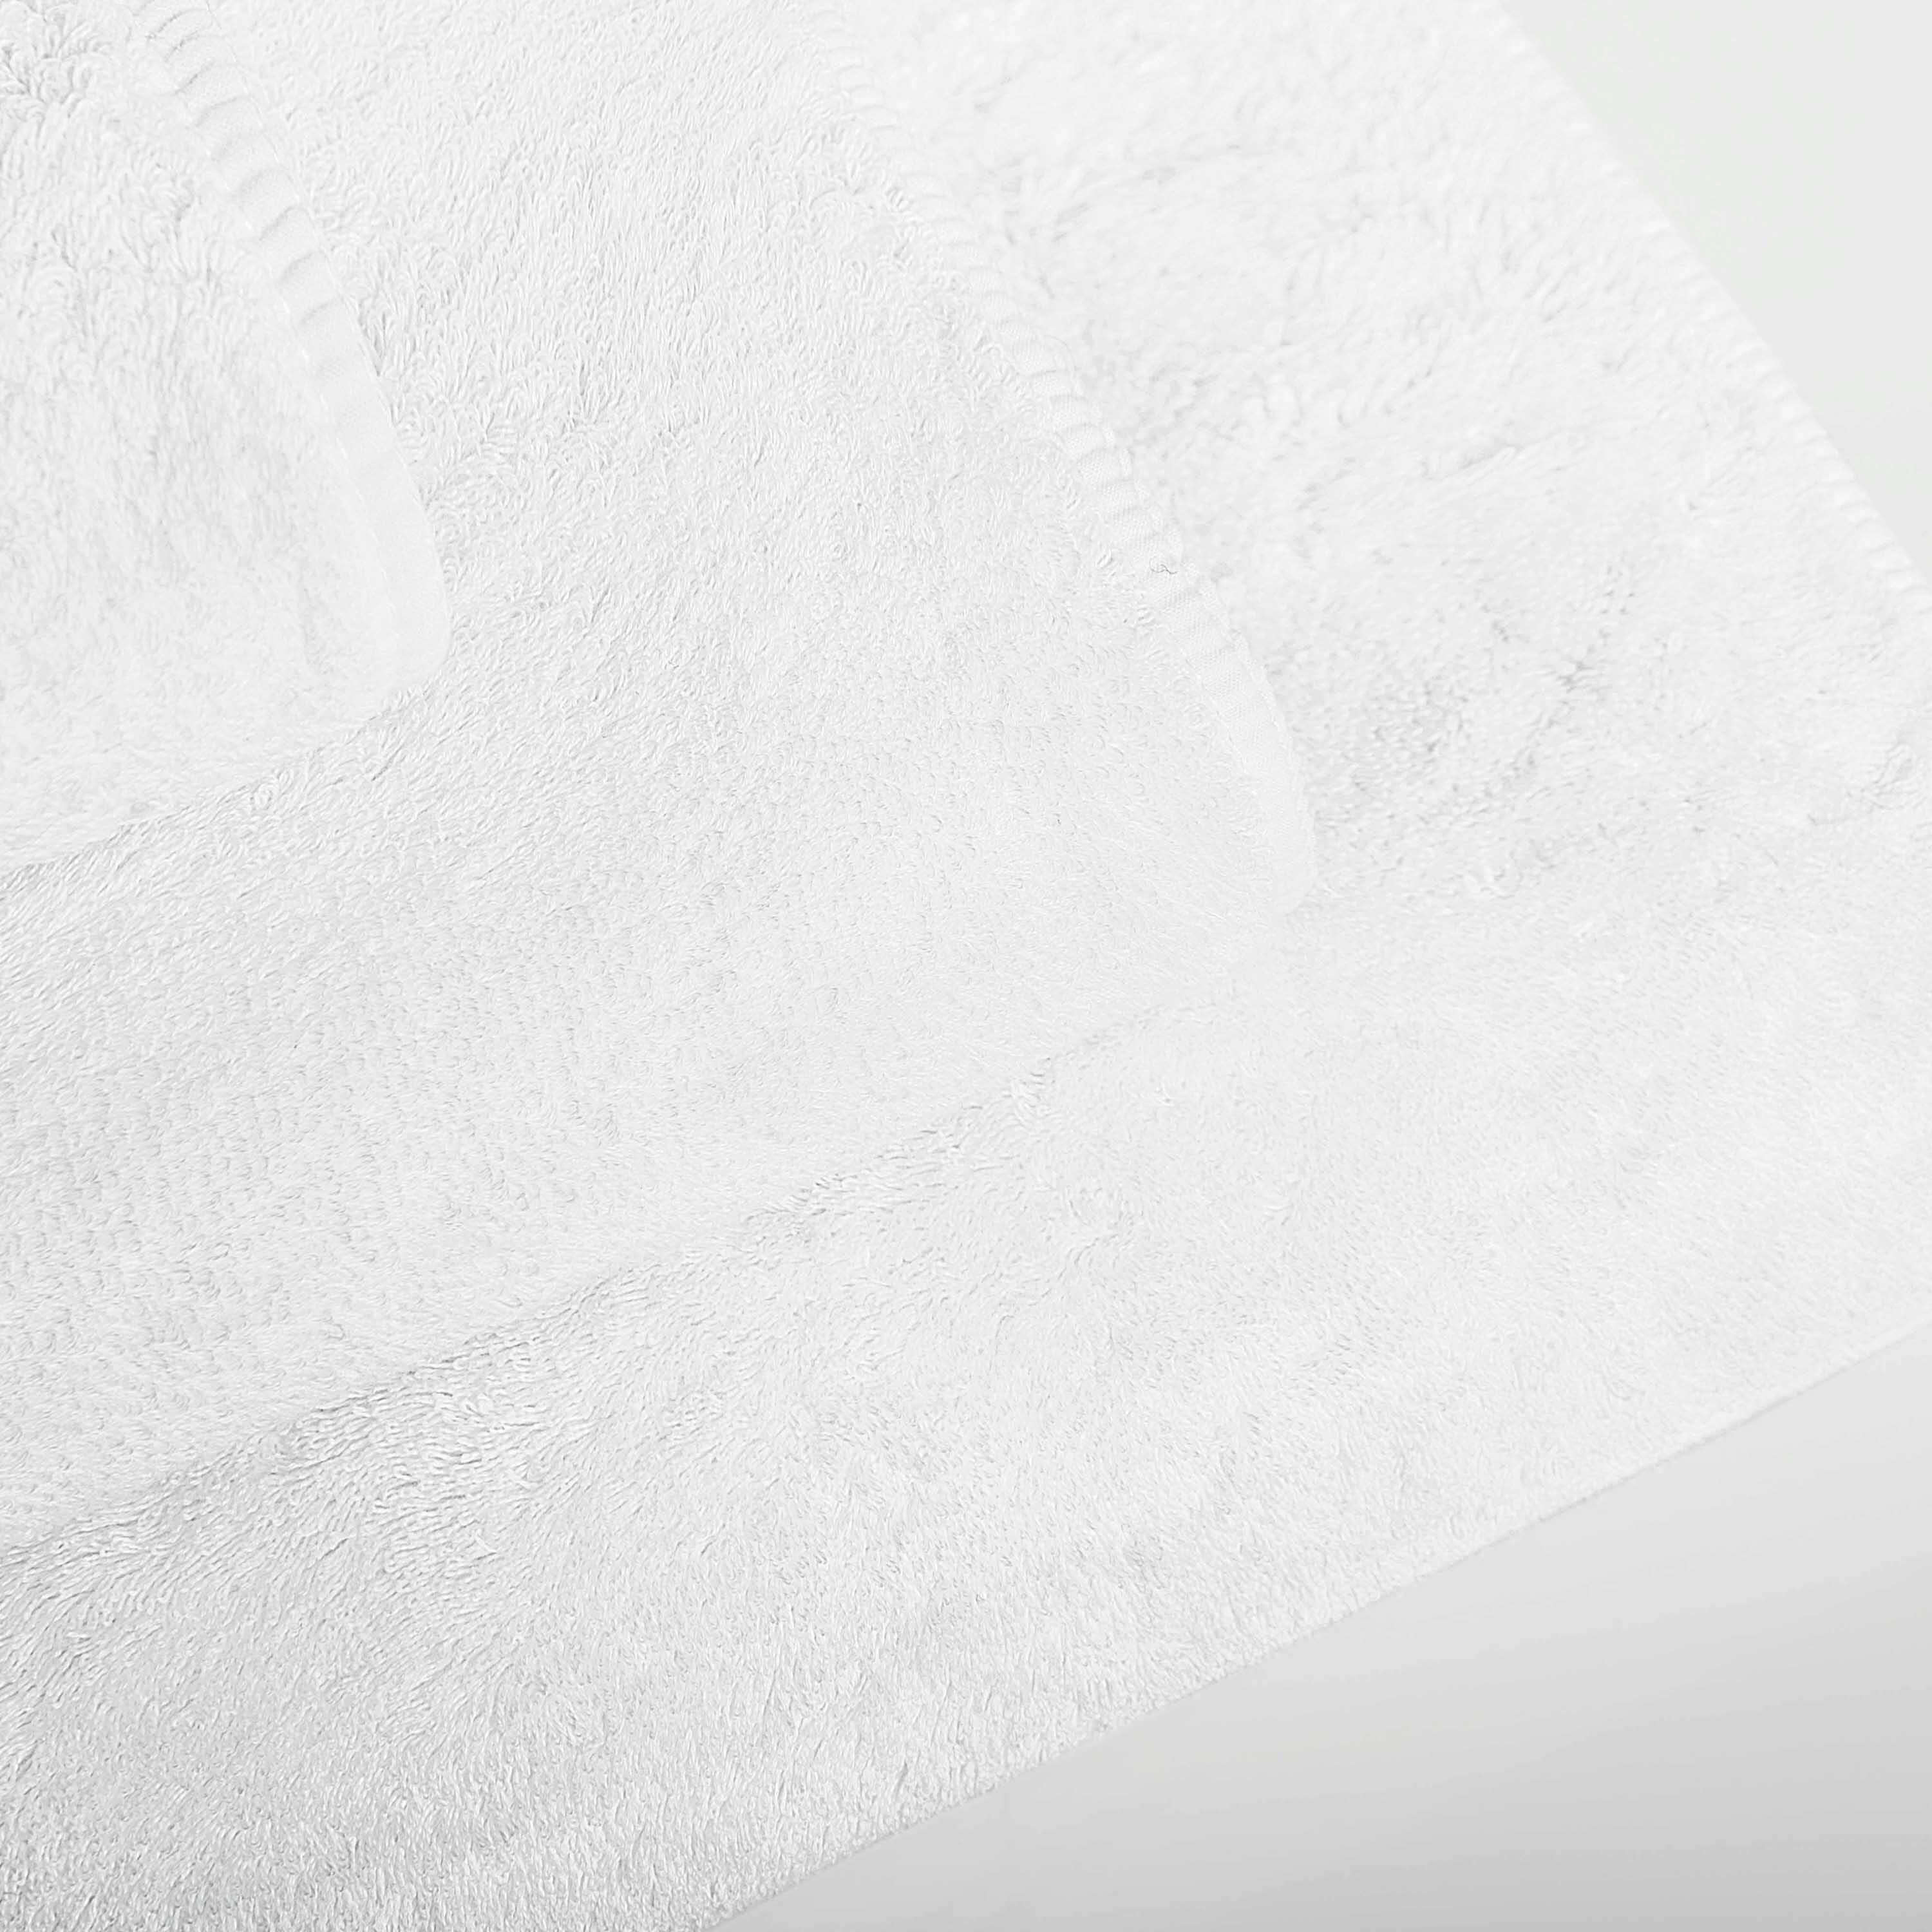 Полотенце Long Double White ☞ Размер: 16 x 21 см (уголок для купания)